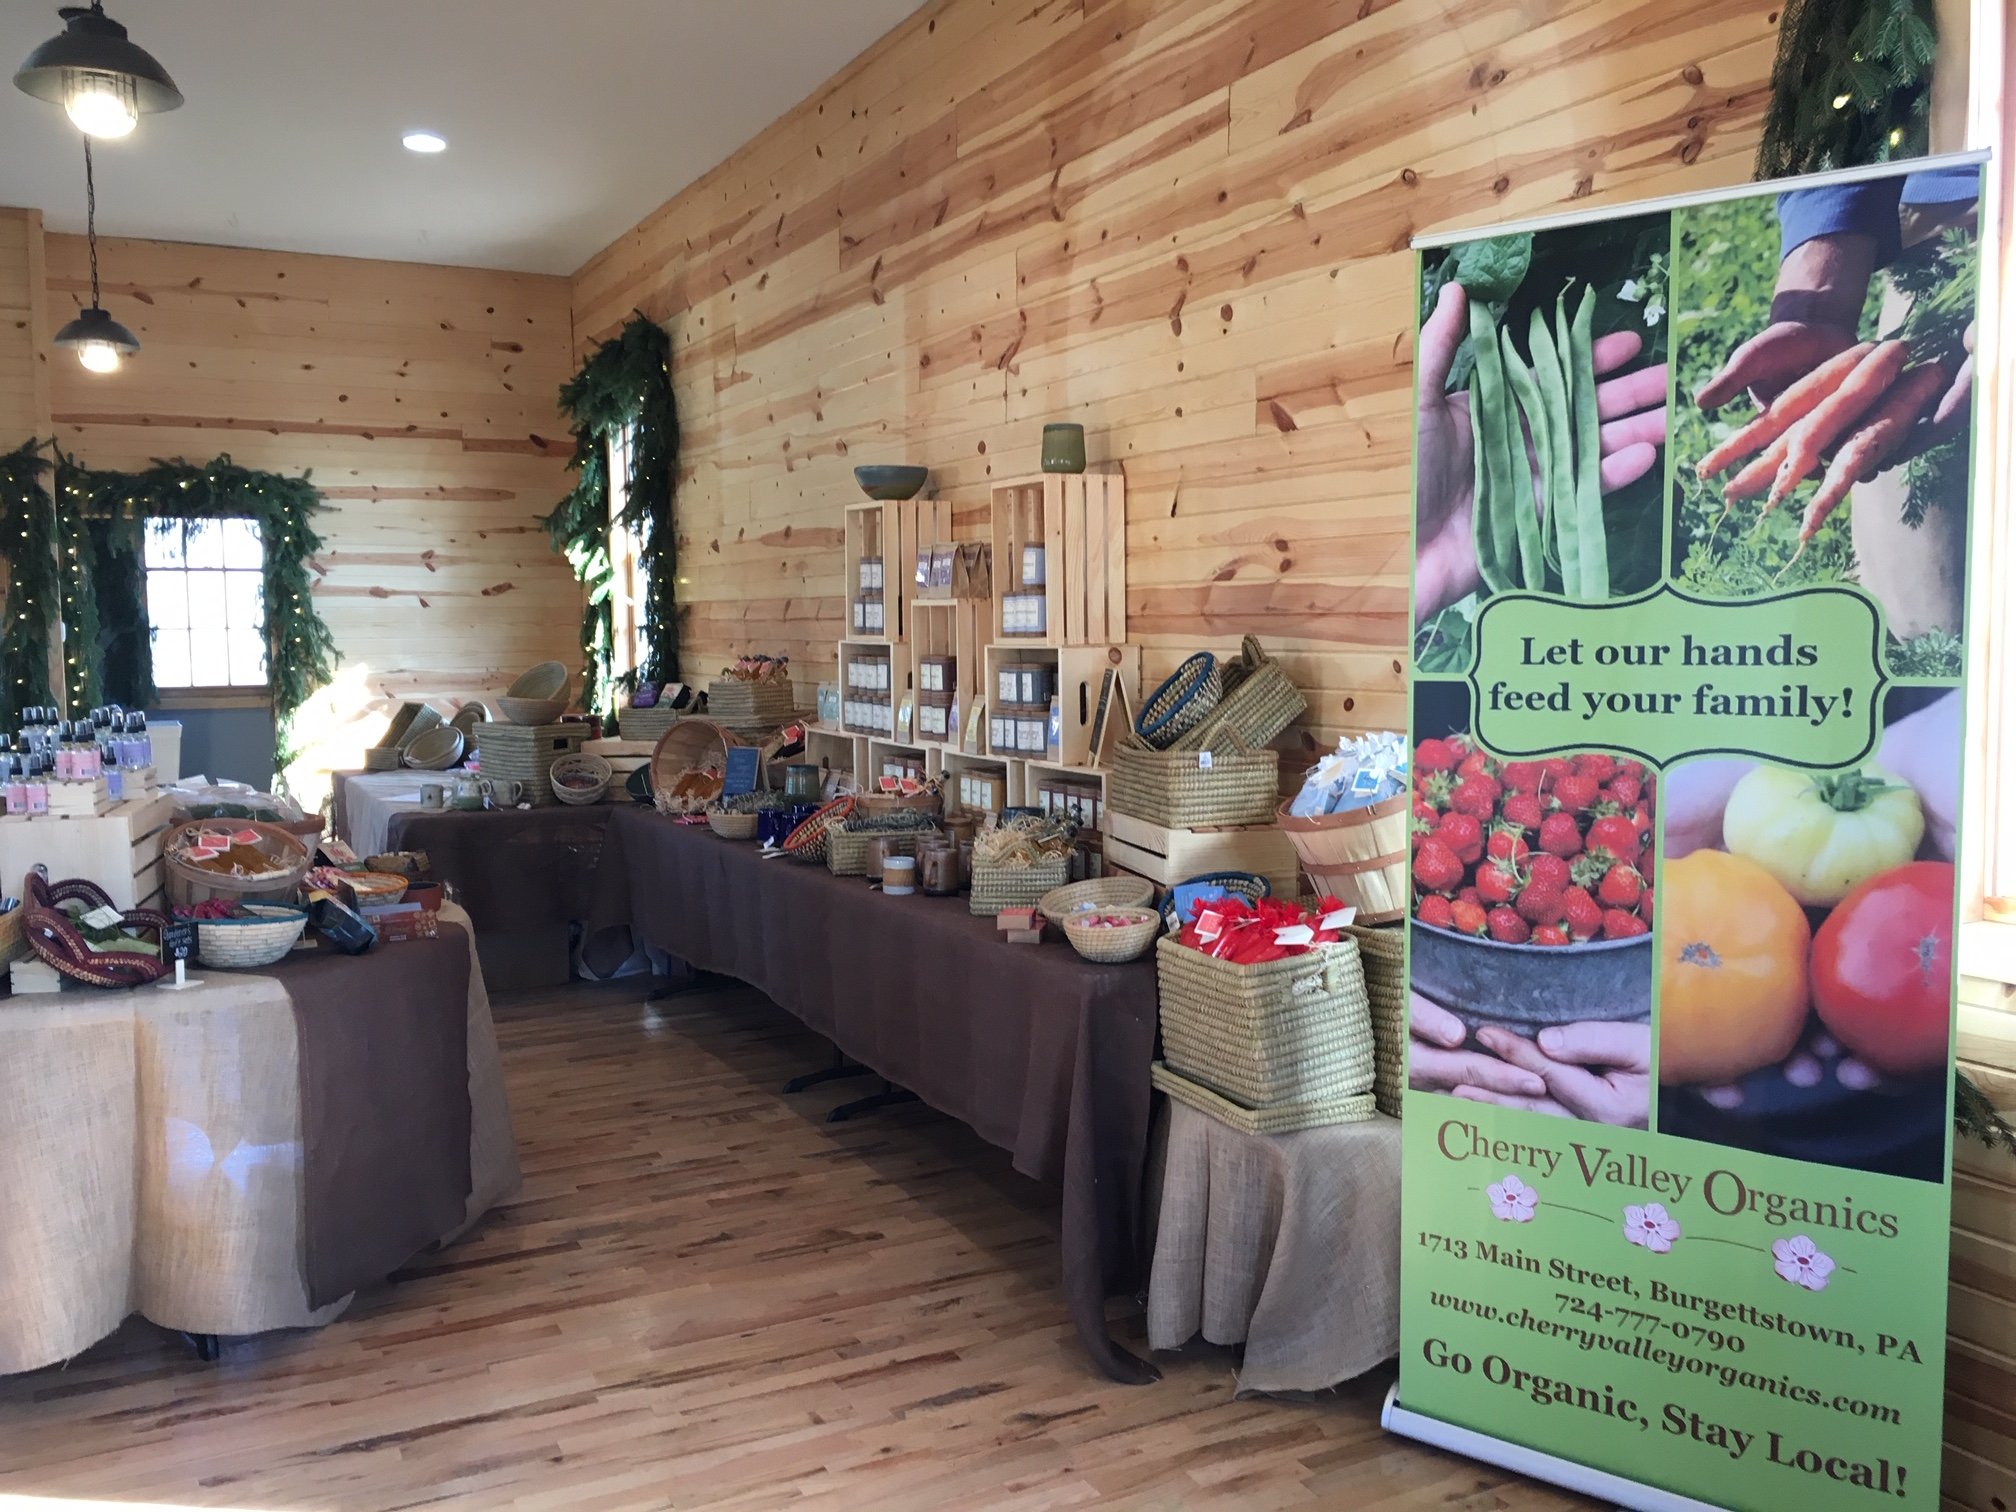 Next Happening: Cherry Valley Organics Holiday Market!